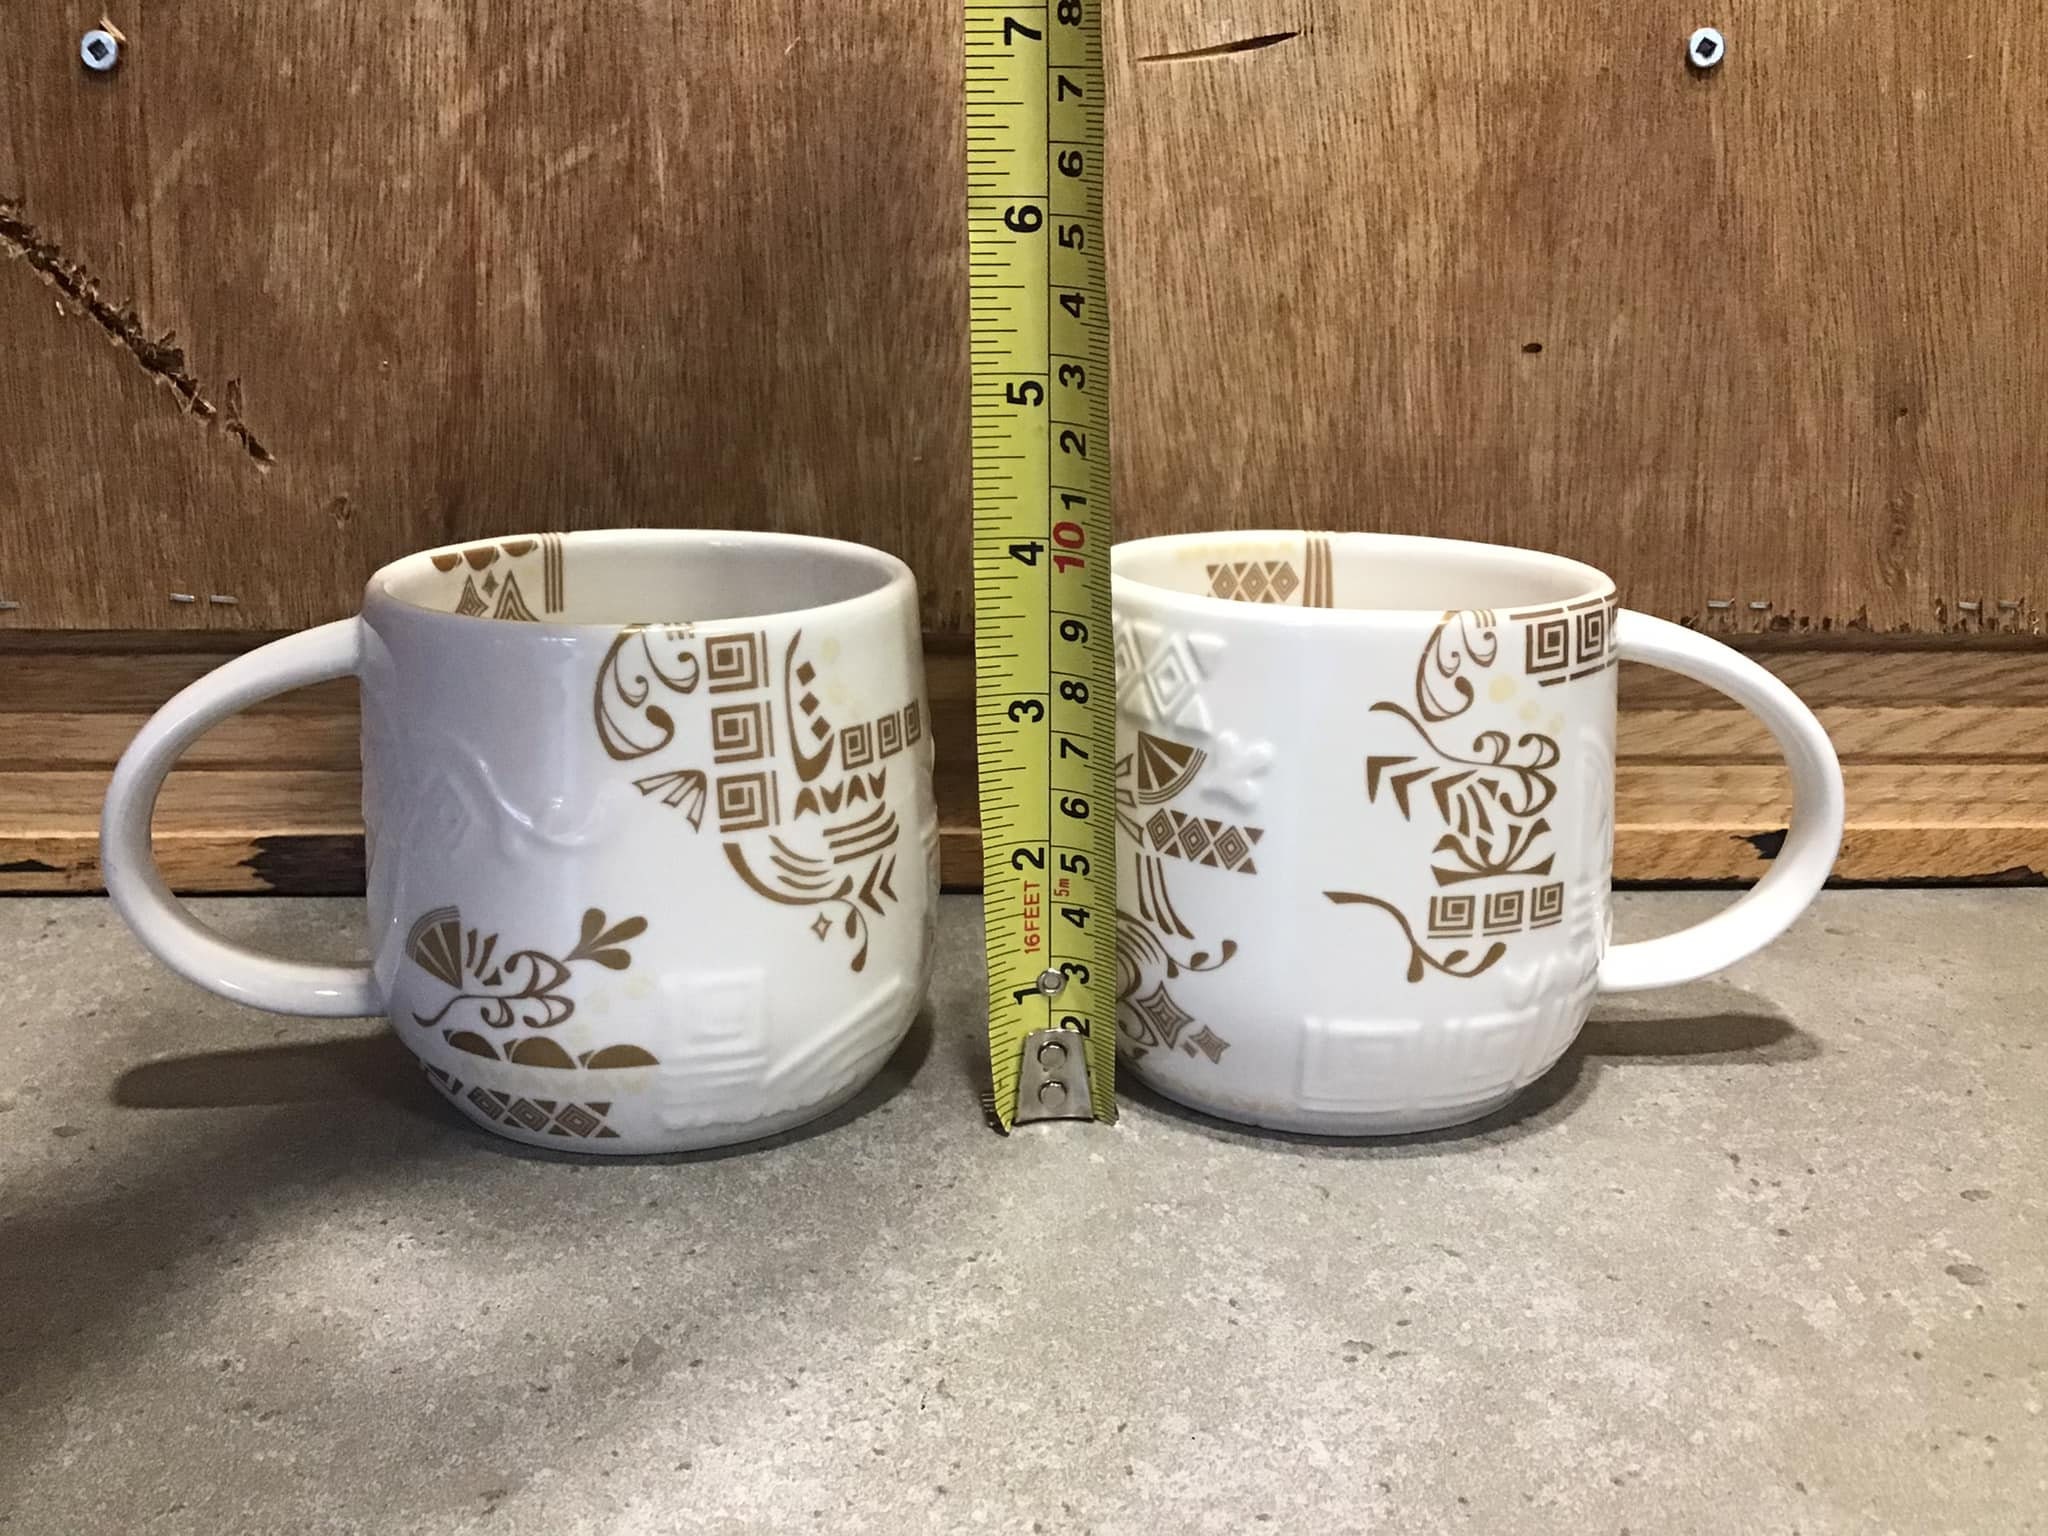 Selection of Collectible Starbucks Coffee / Tea Mugs 2 and Tumbler